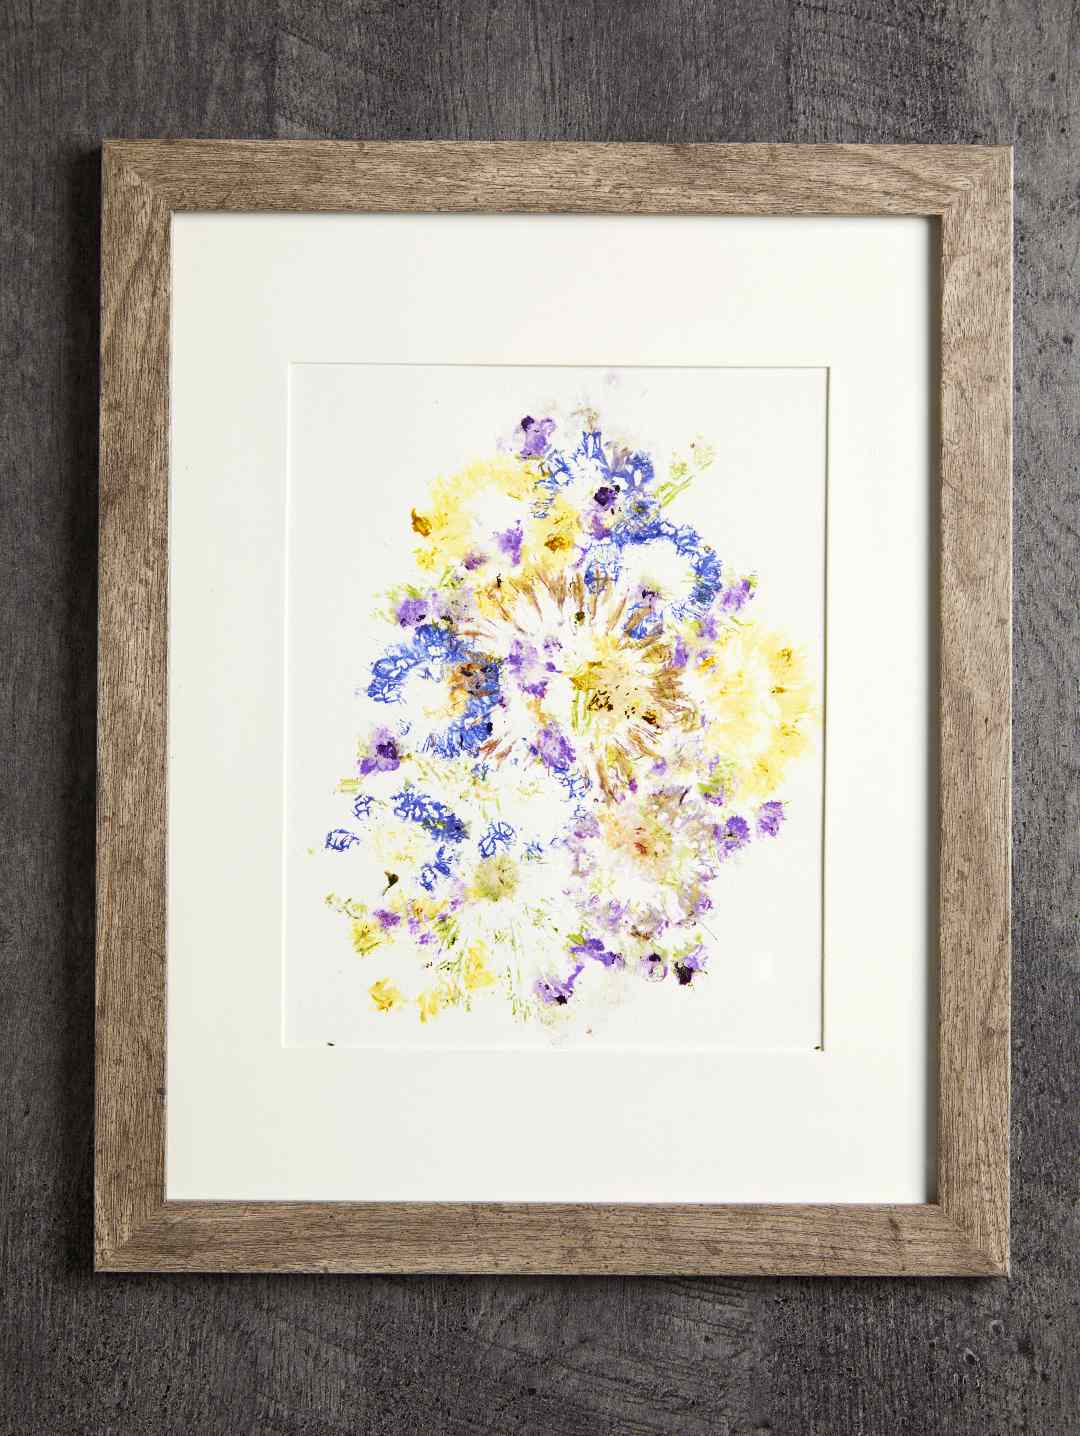 smashed flower colors in wooden frame